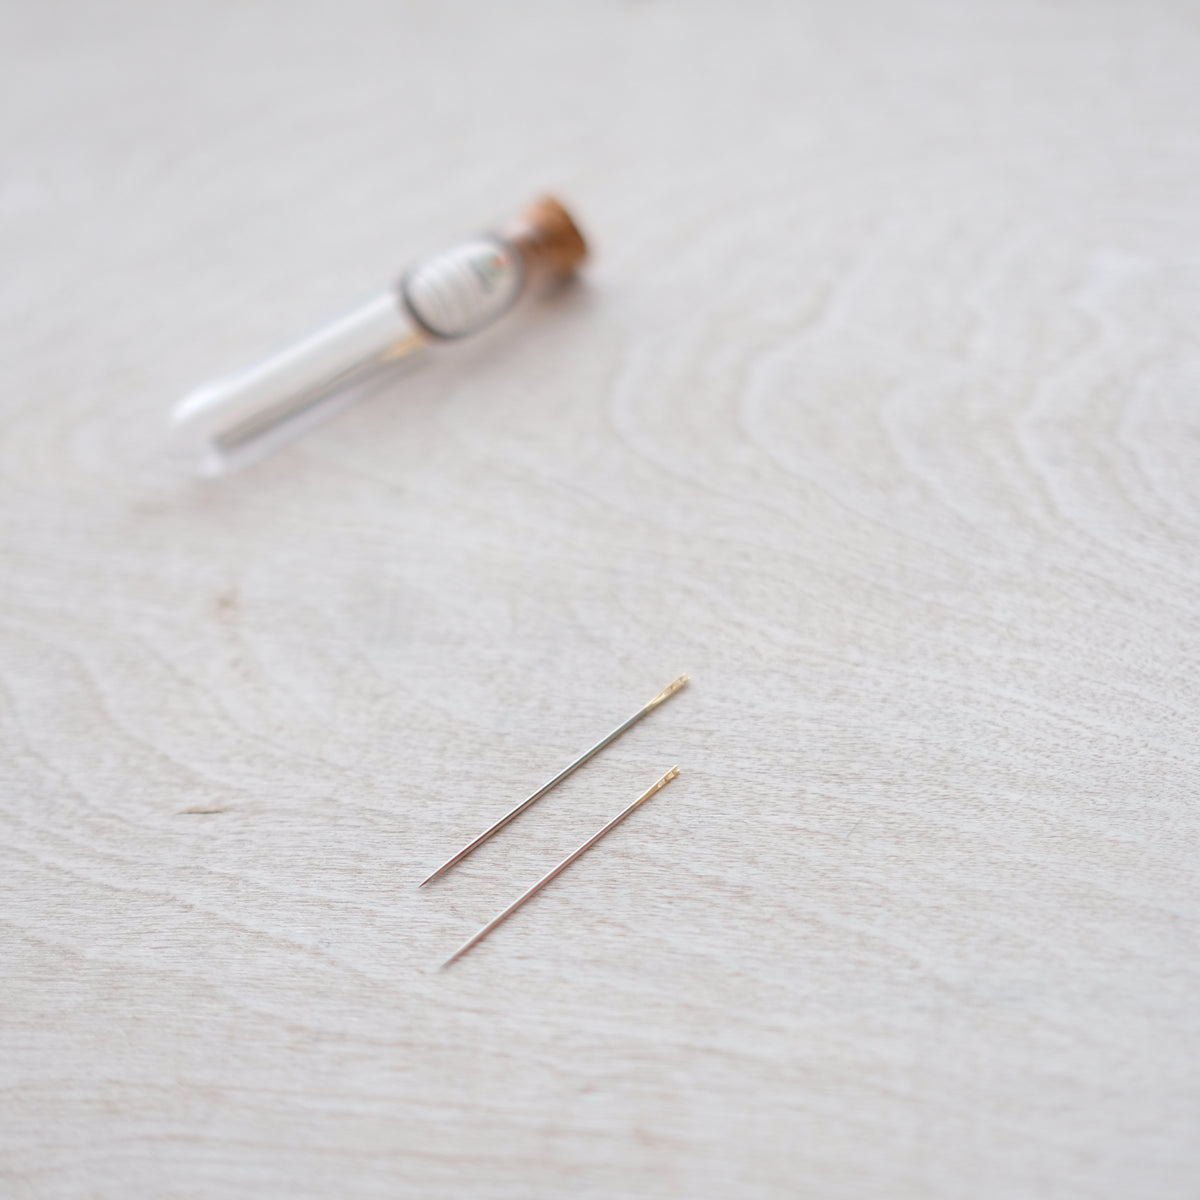 Label: Easy Thread Needles - Assorted